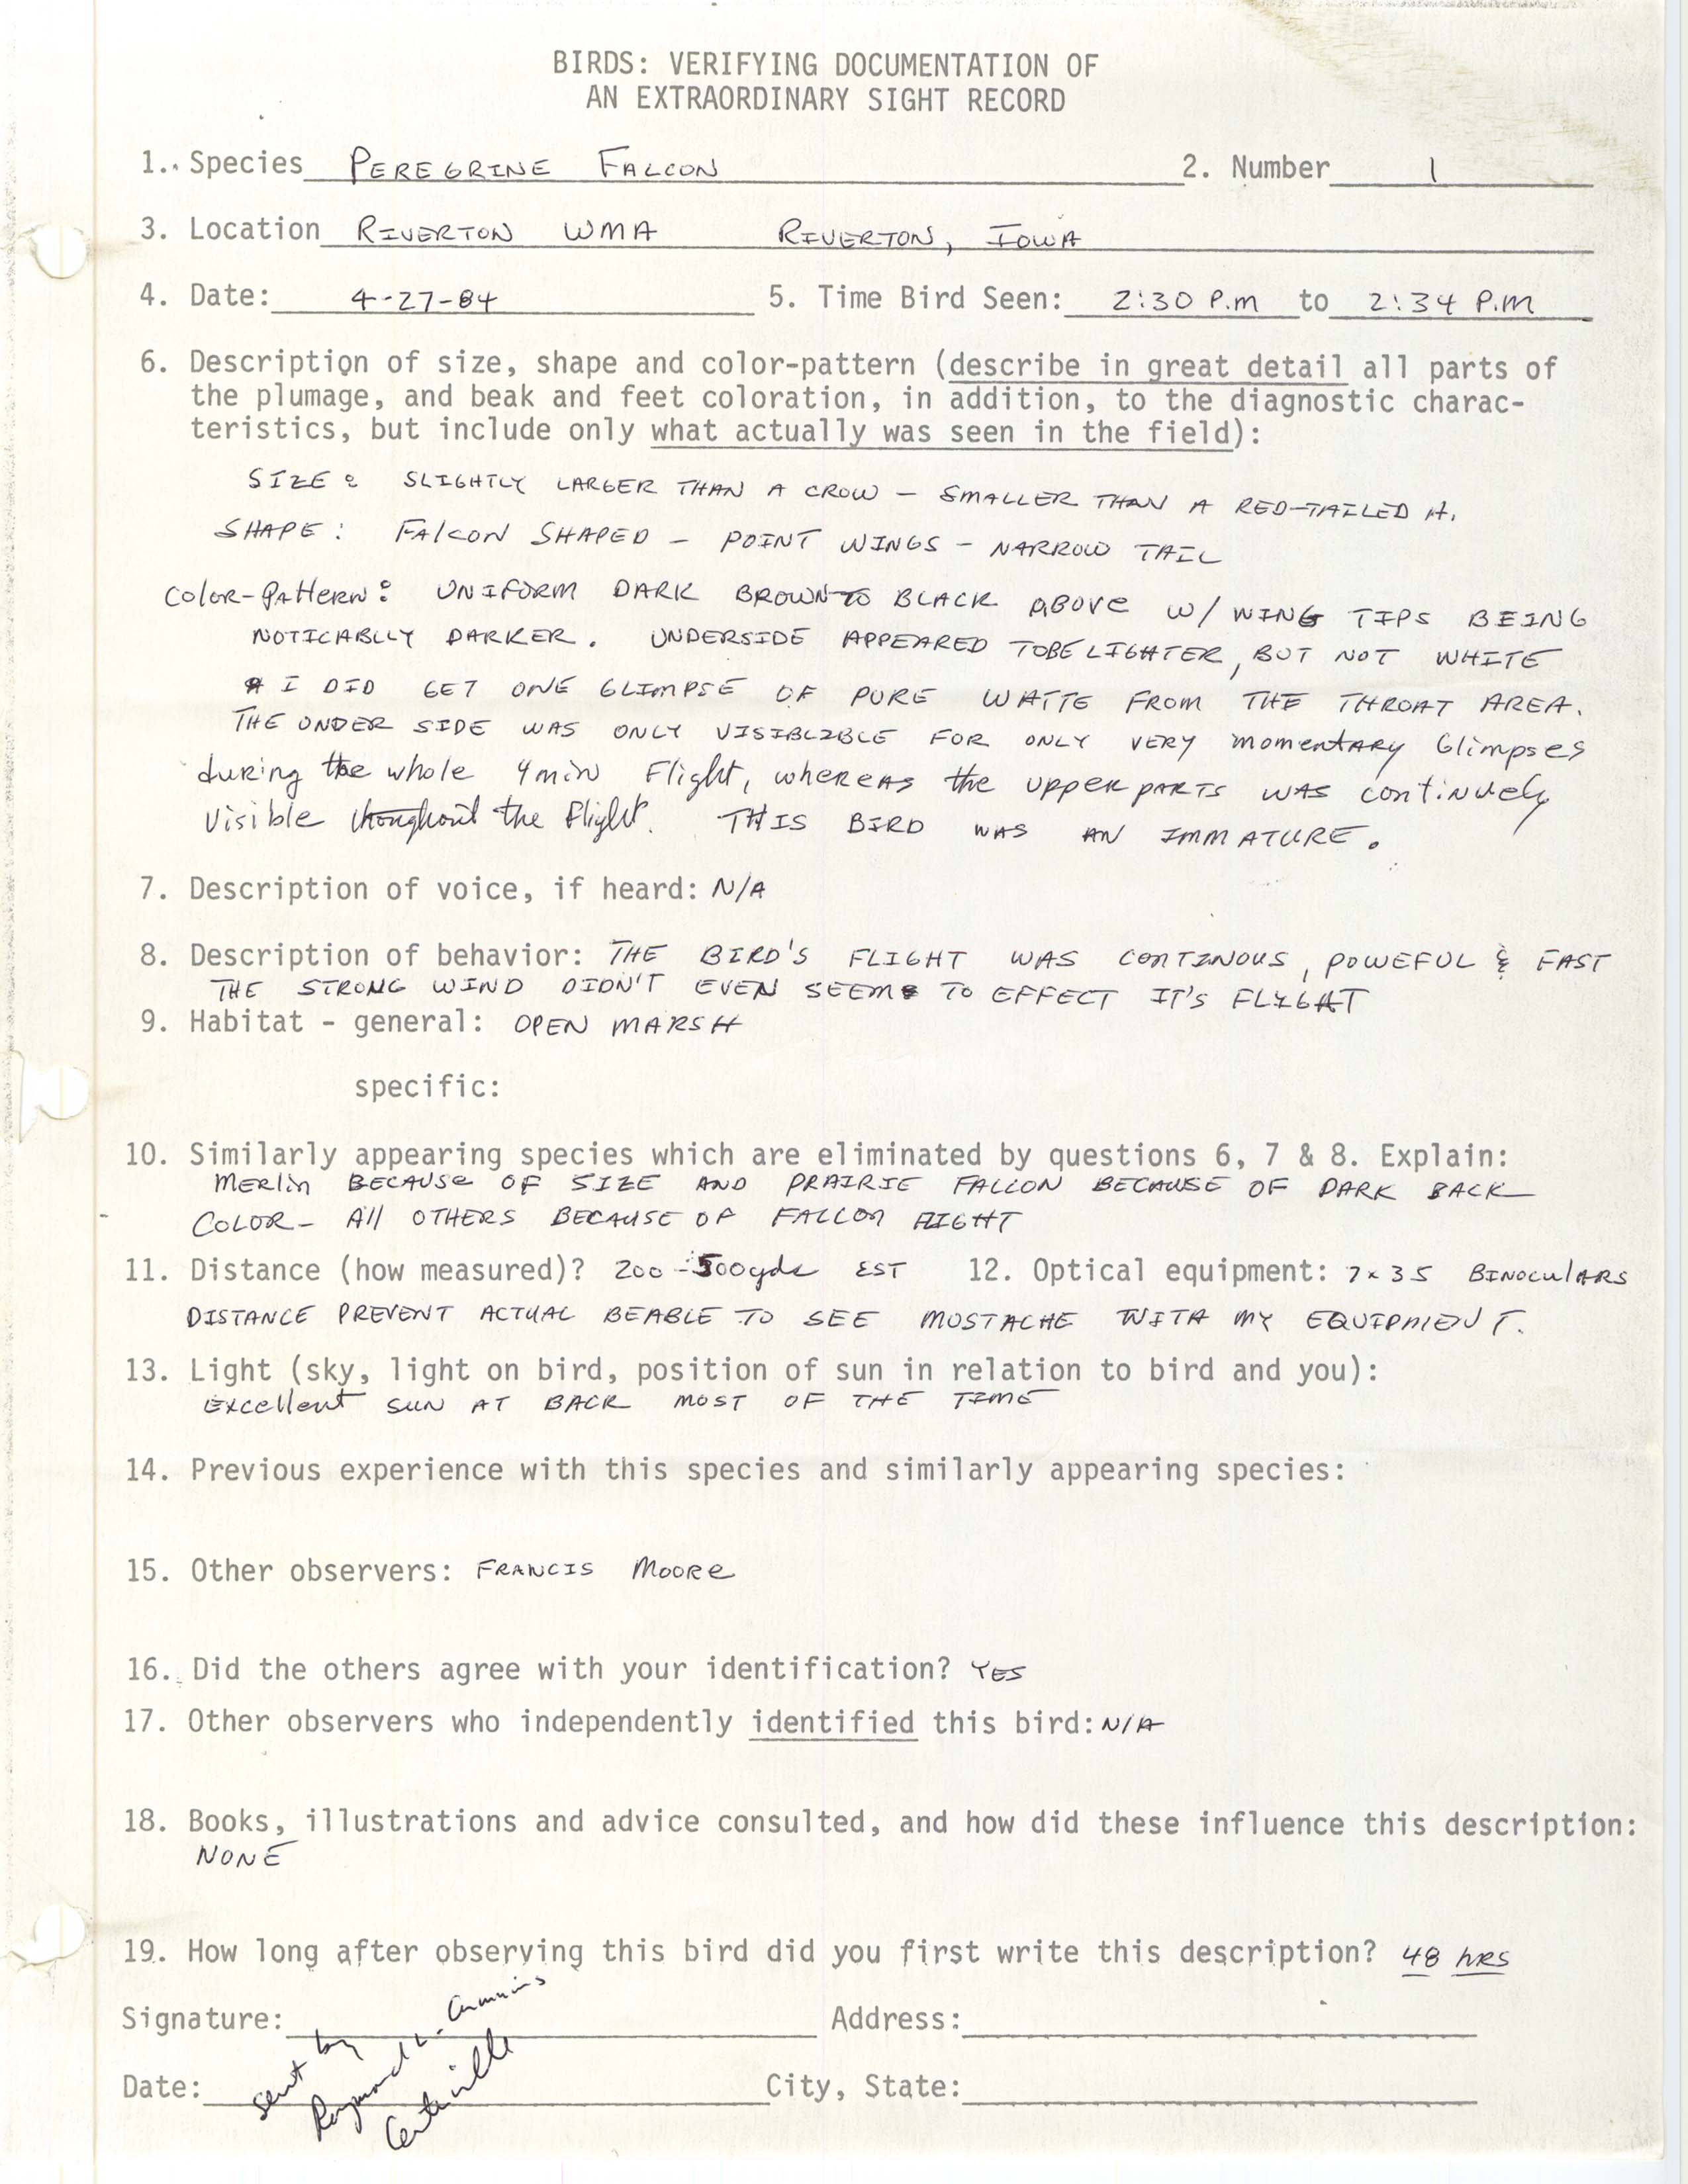 Rare bird documentation form for Peregrine Falcon at Riverton Wildlife Management Area, 1984